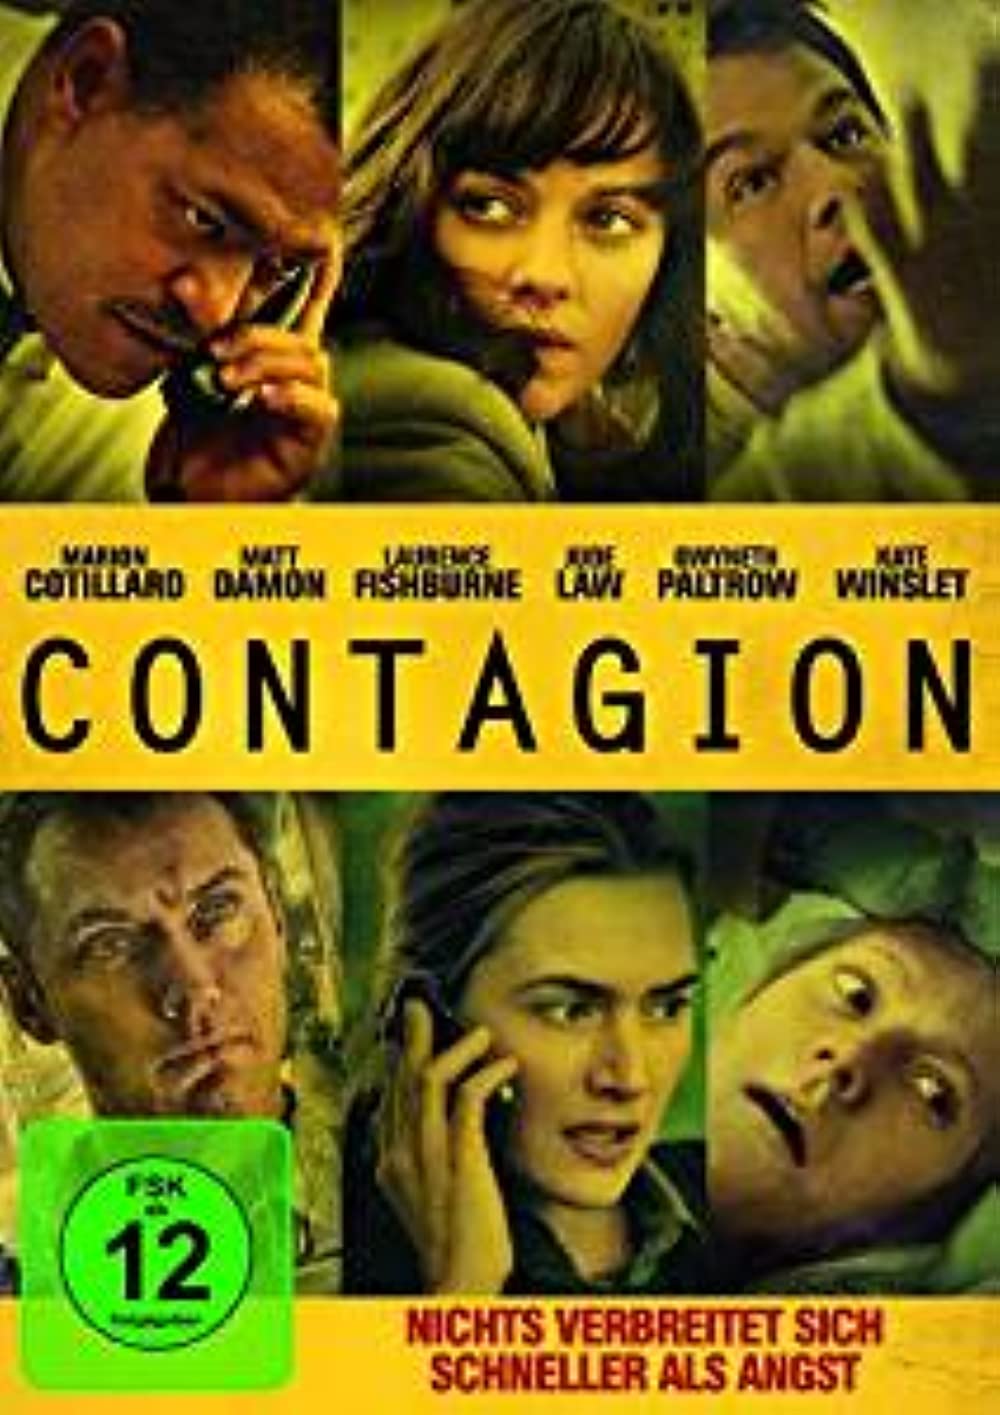 Filmbeschreibung zu Contagion (OV)